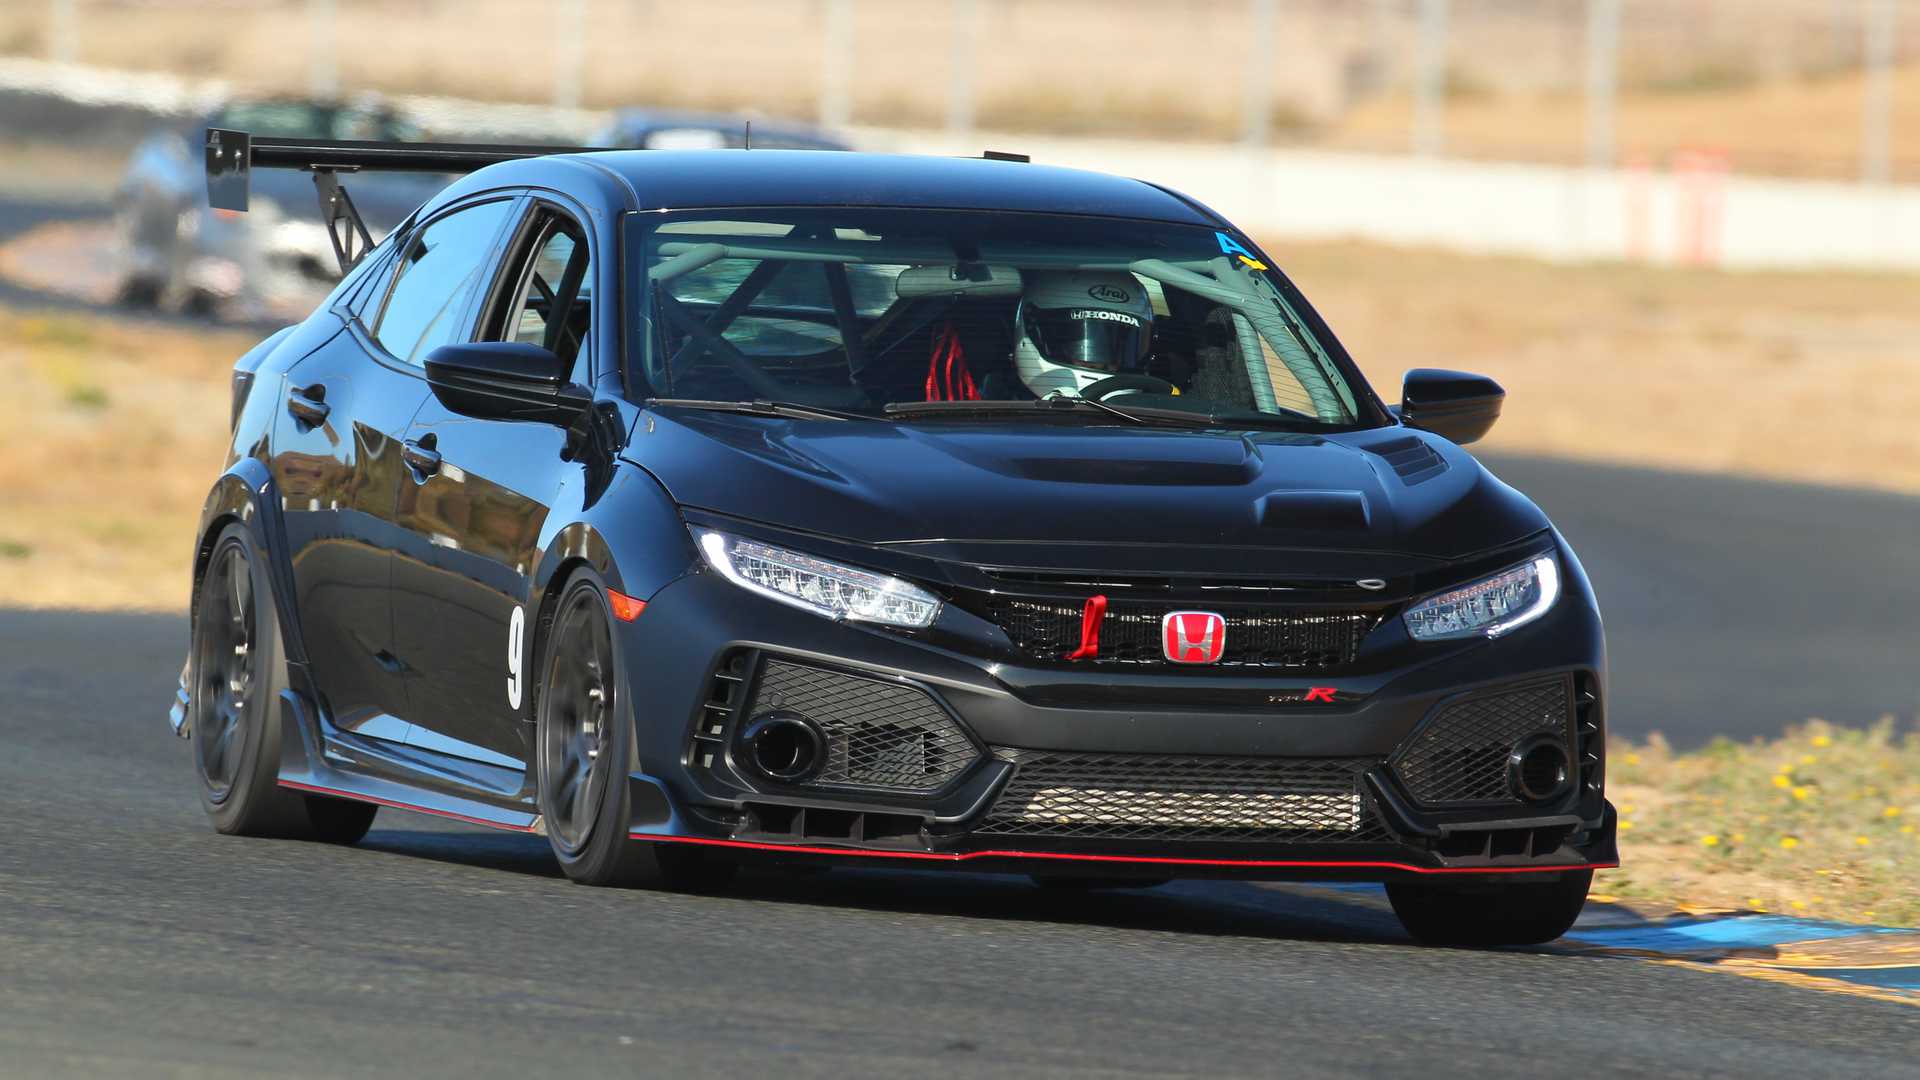 Honda announces Civic Type R TC customer racing car